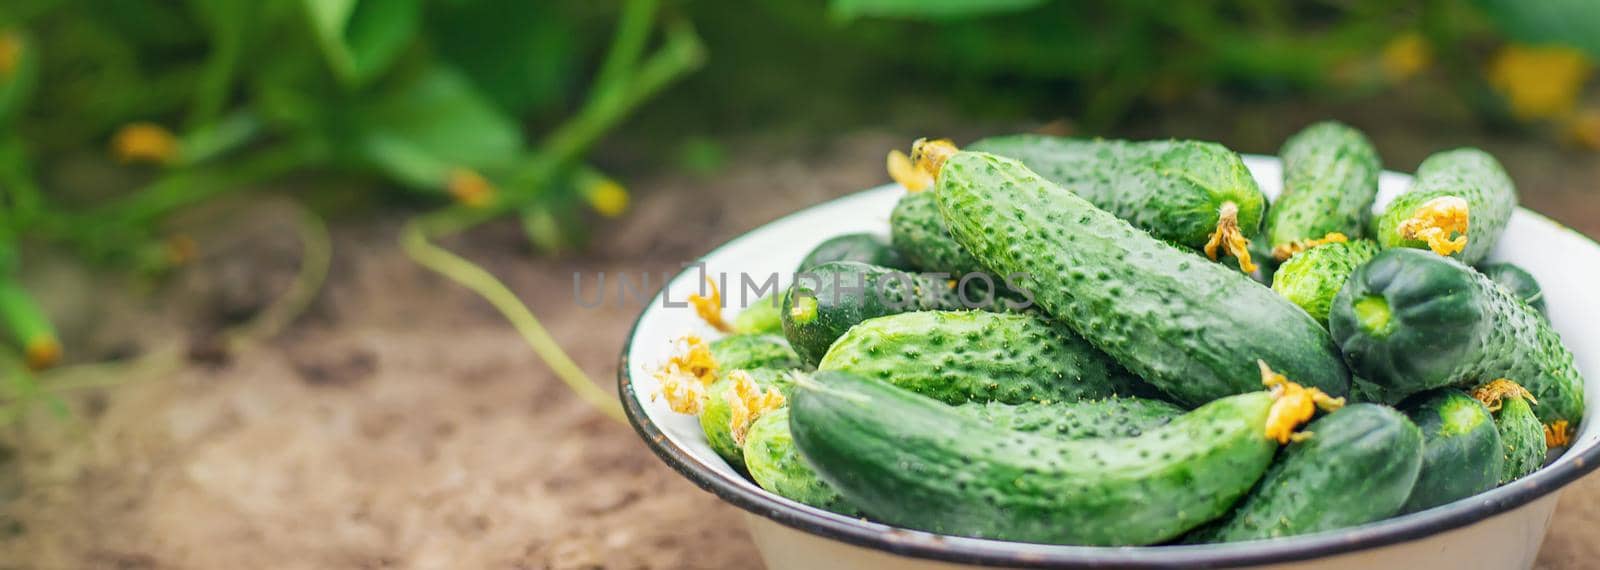 Harvesting homemade cucumbers. Selective focus nature